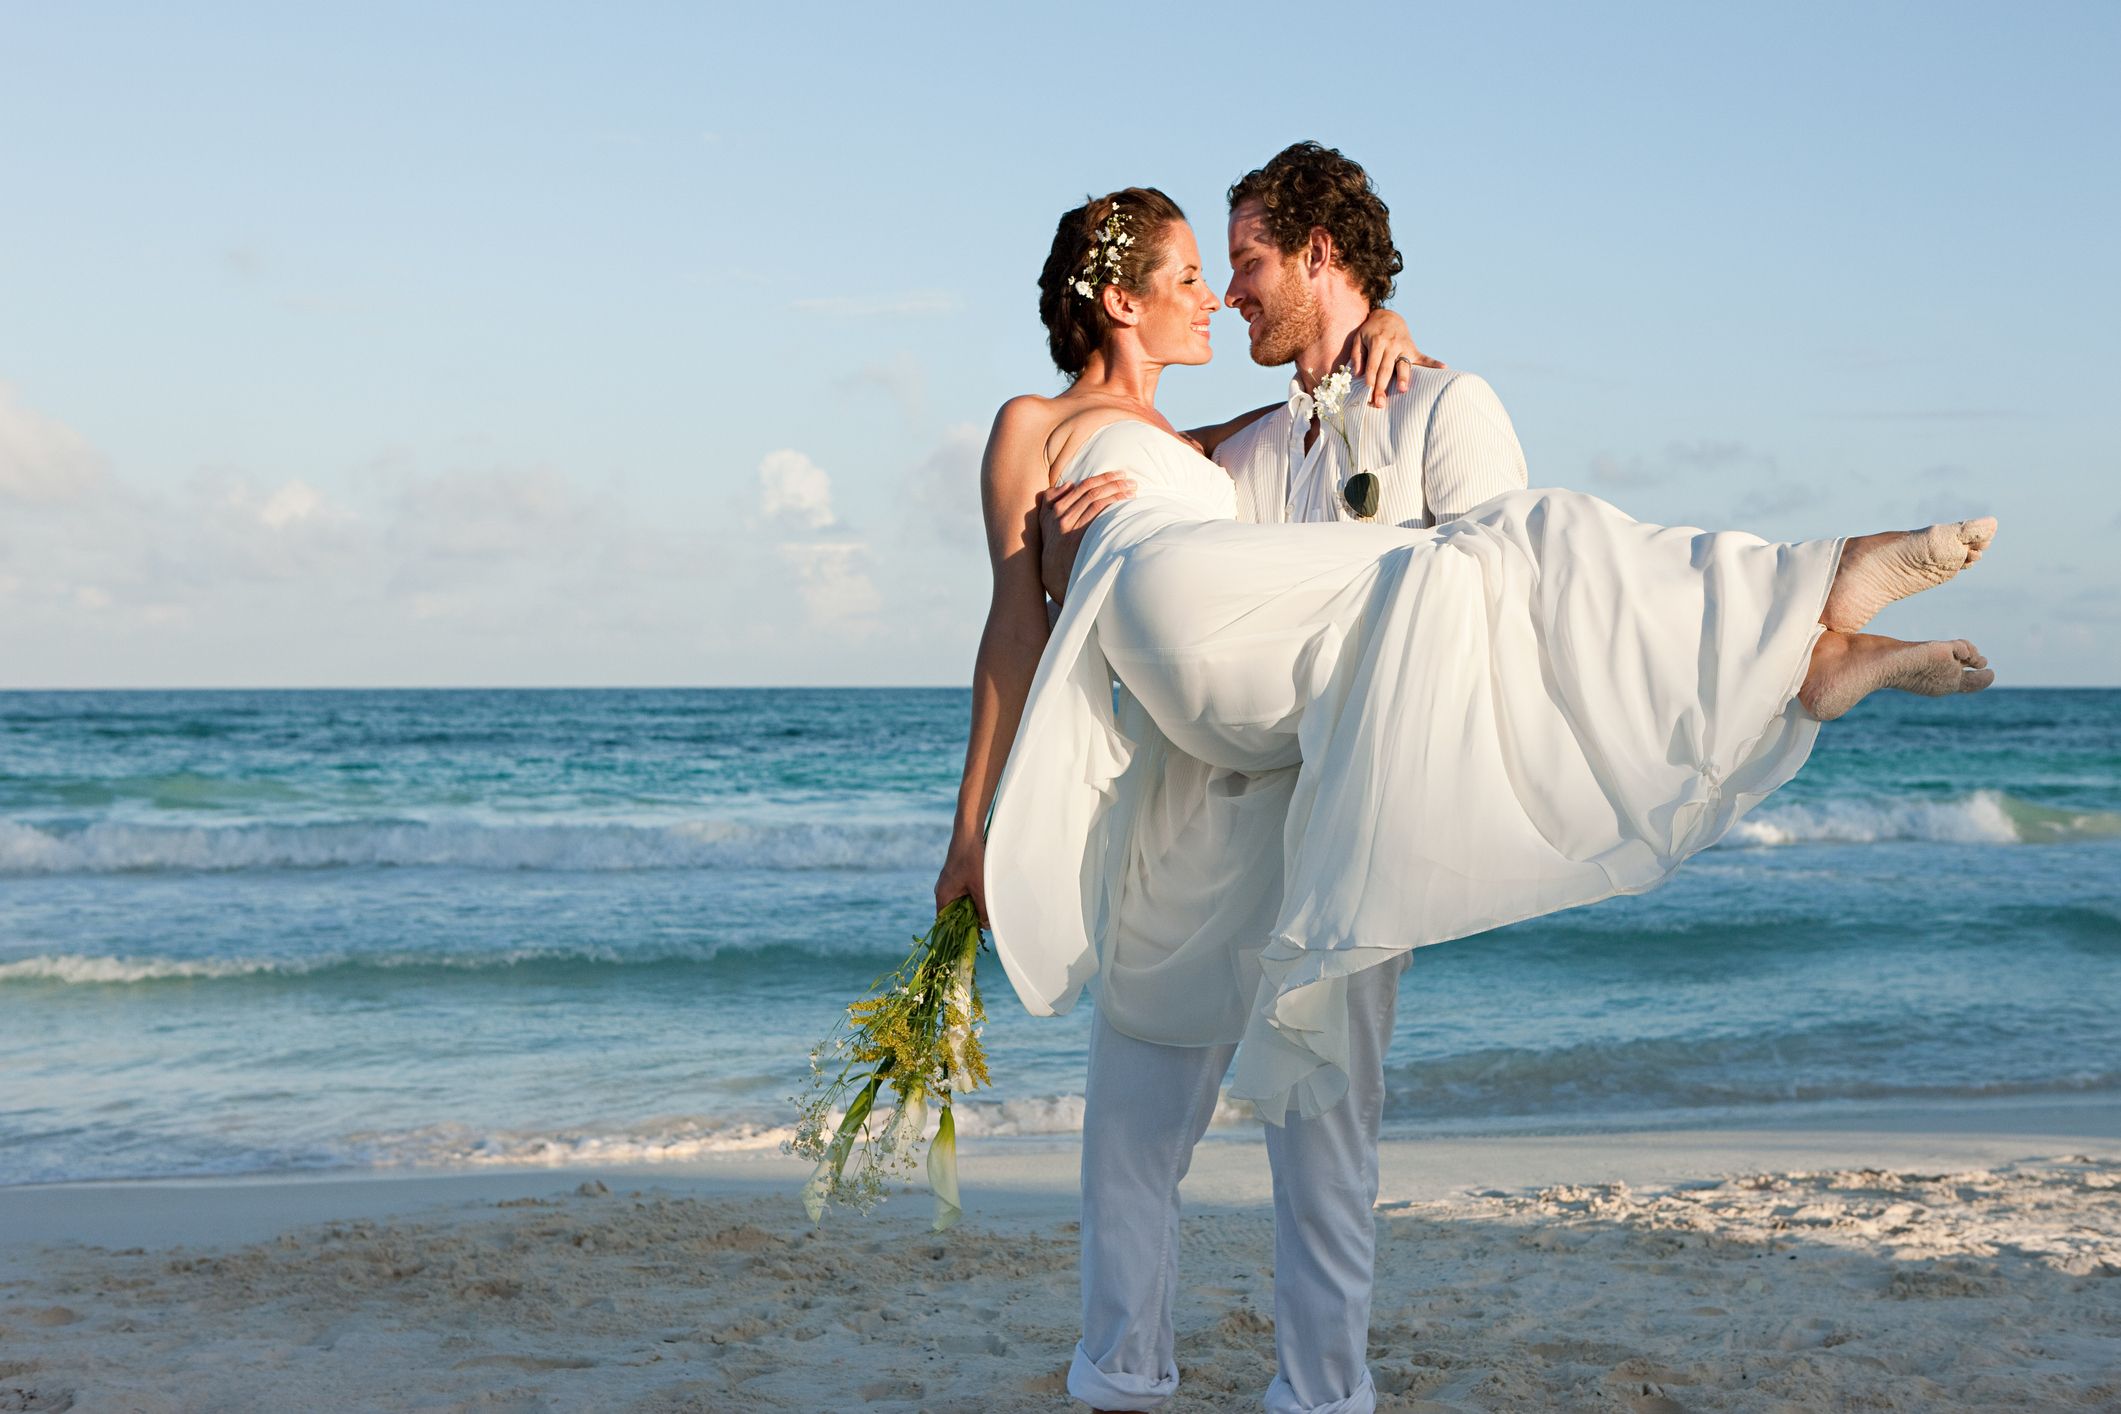 Men Reveal Their Ultimate Dream Wedding